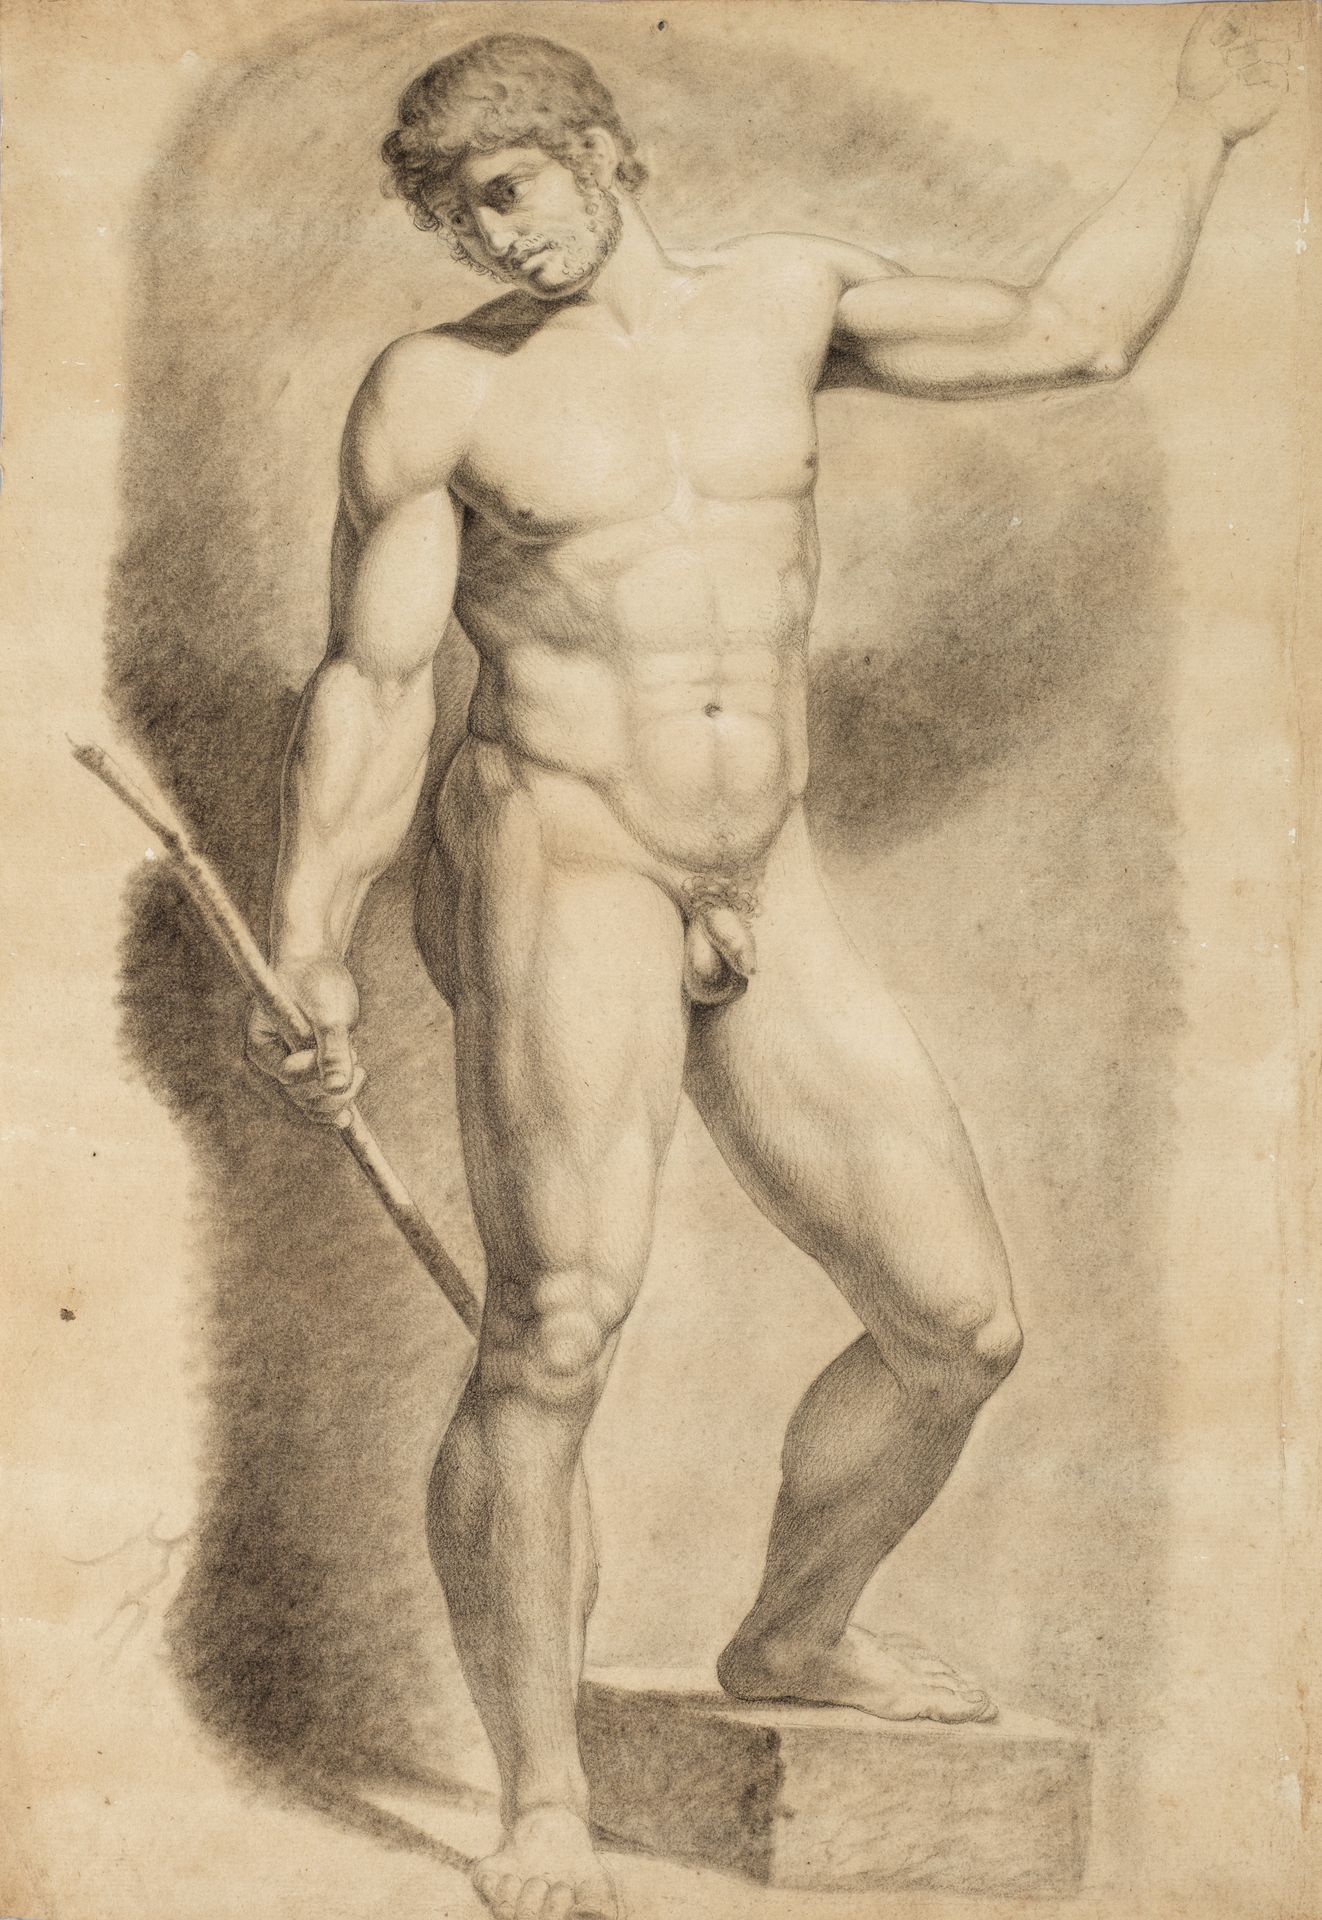 Null Johann Heinrich Beck (1788 Dessau - 1875 ibid.)
Nude study of a young, bear&hellip;